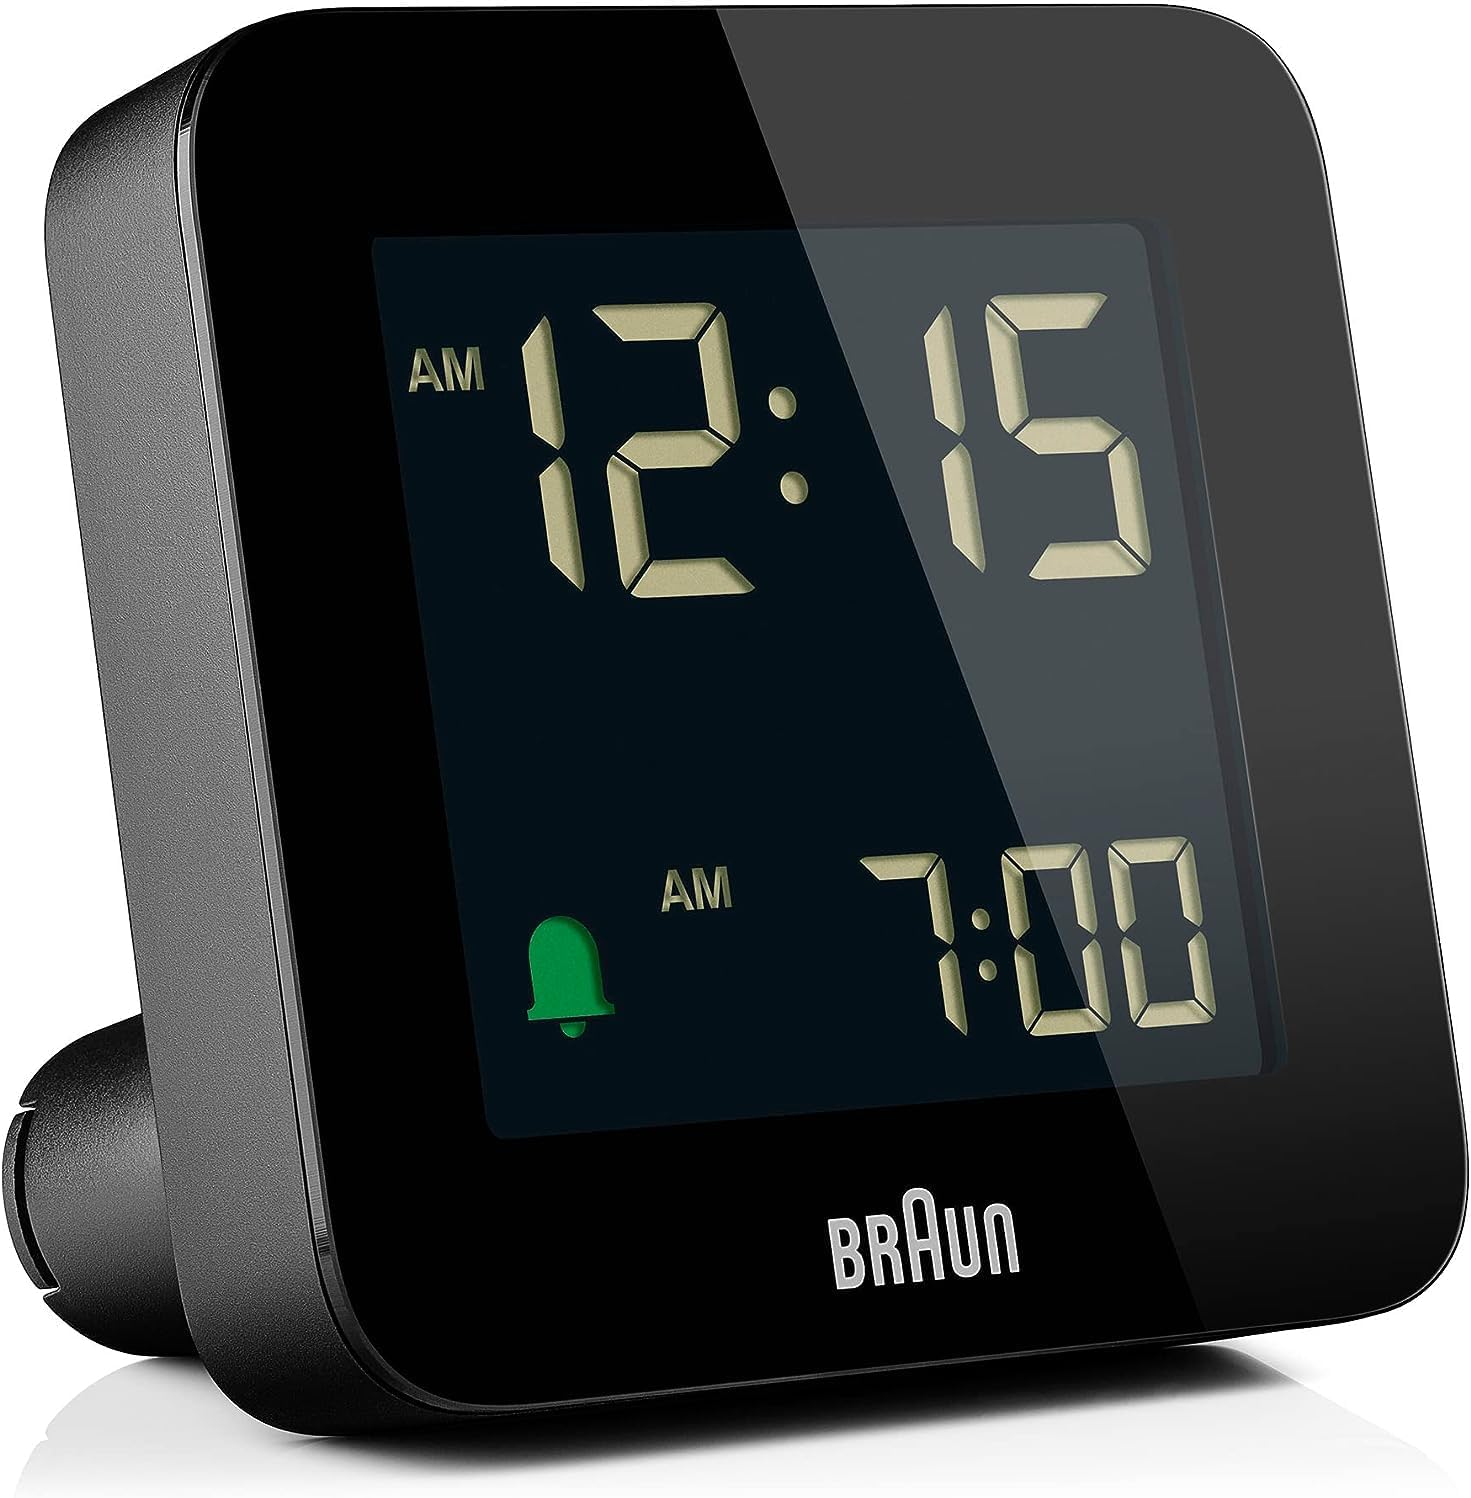 Braun Digital Alarm Clock with Snooze - Black